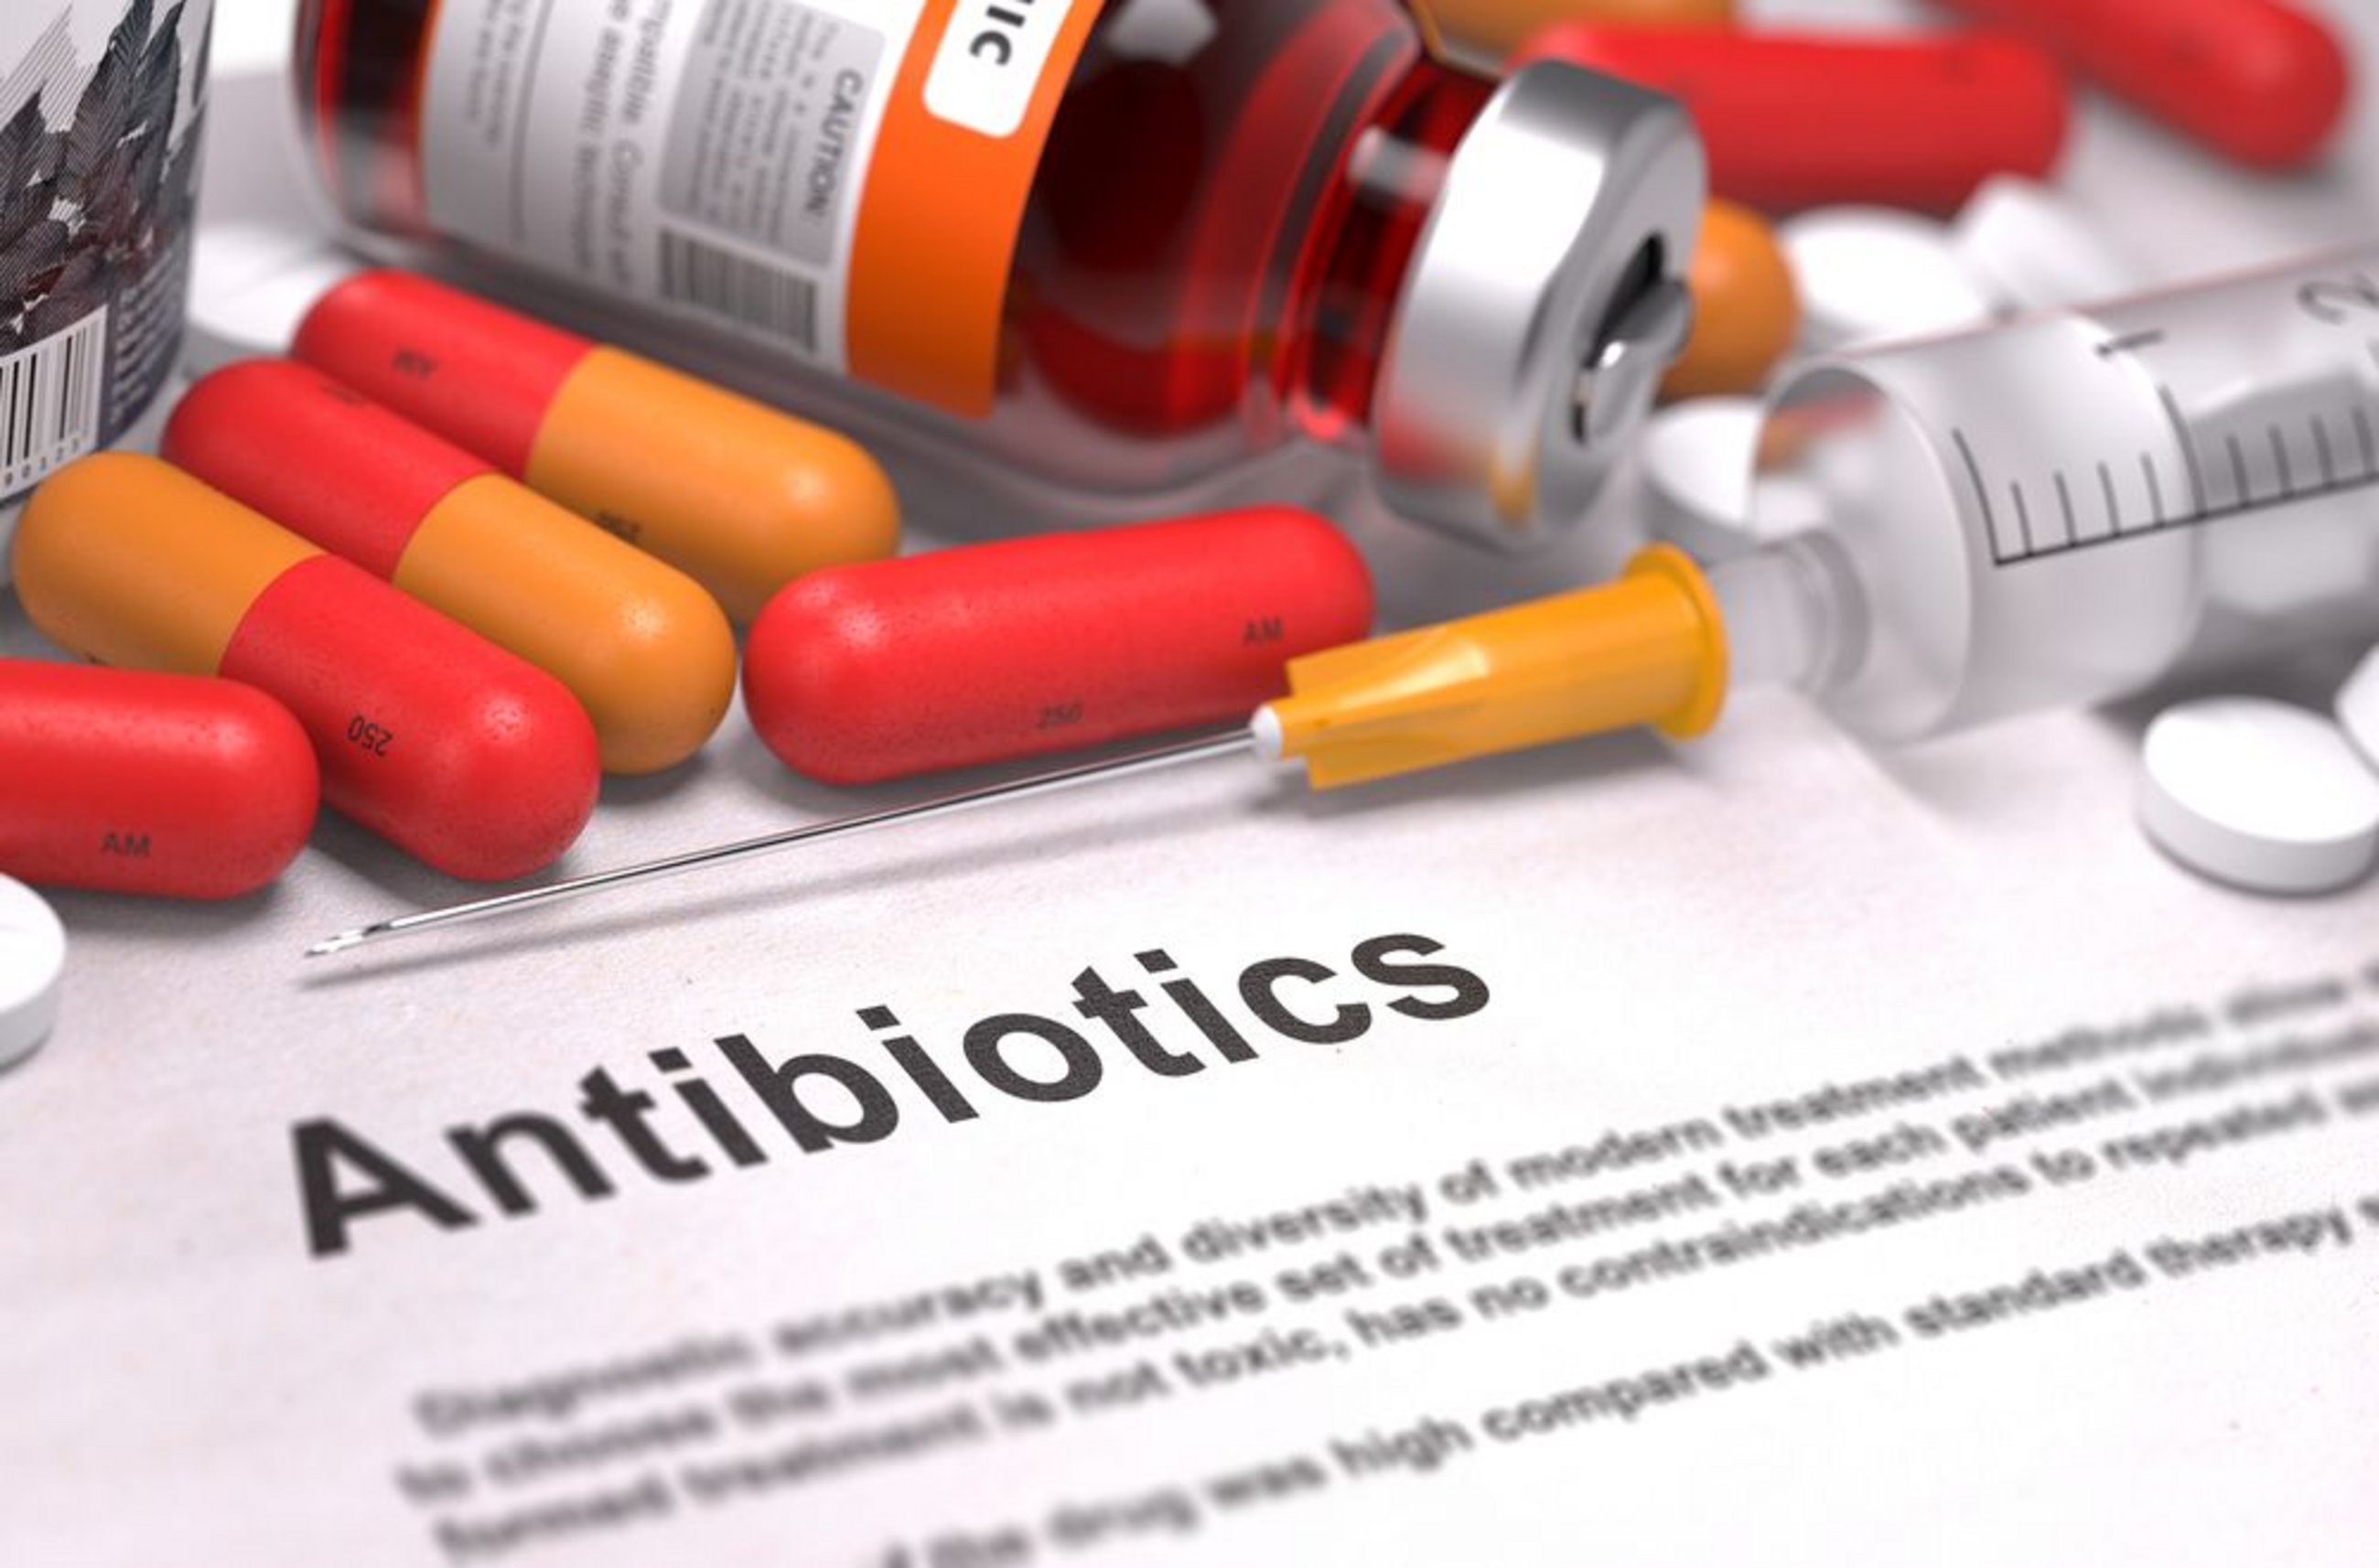 Antibiotici: una sfida “multi-prospettica” (cepInput)